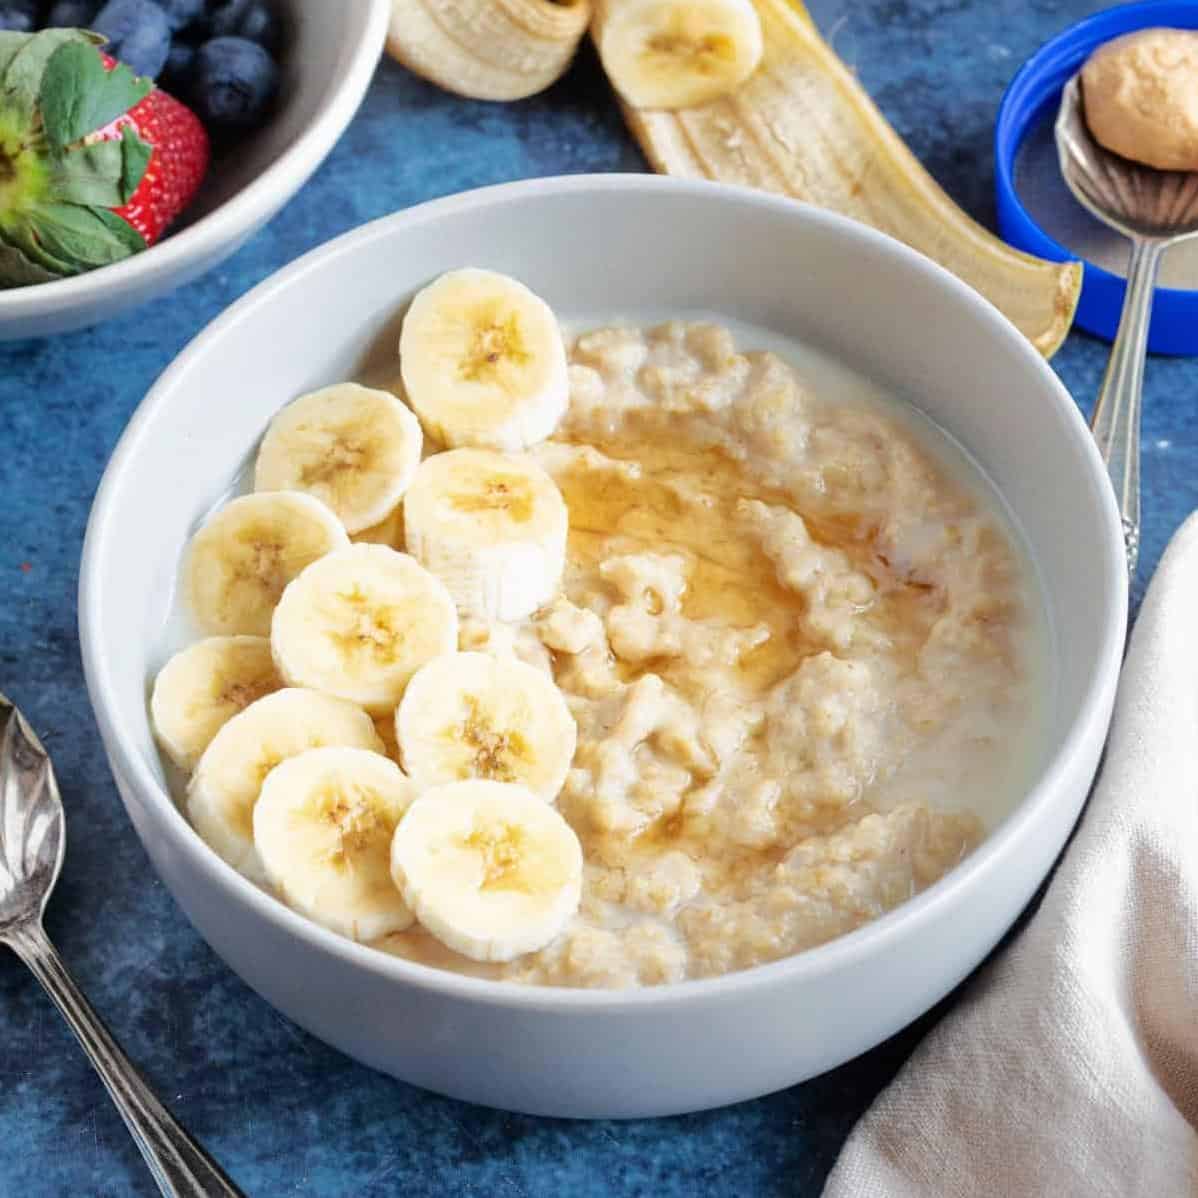 Creamy Peanut Butter Porridge – A Delicious Breakfast Recipe